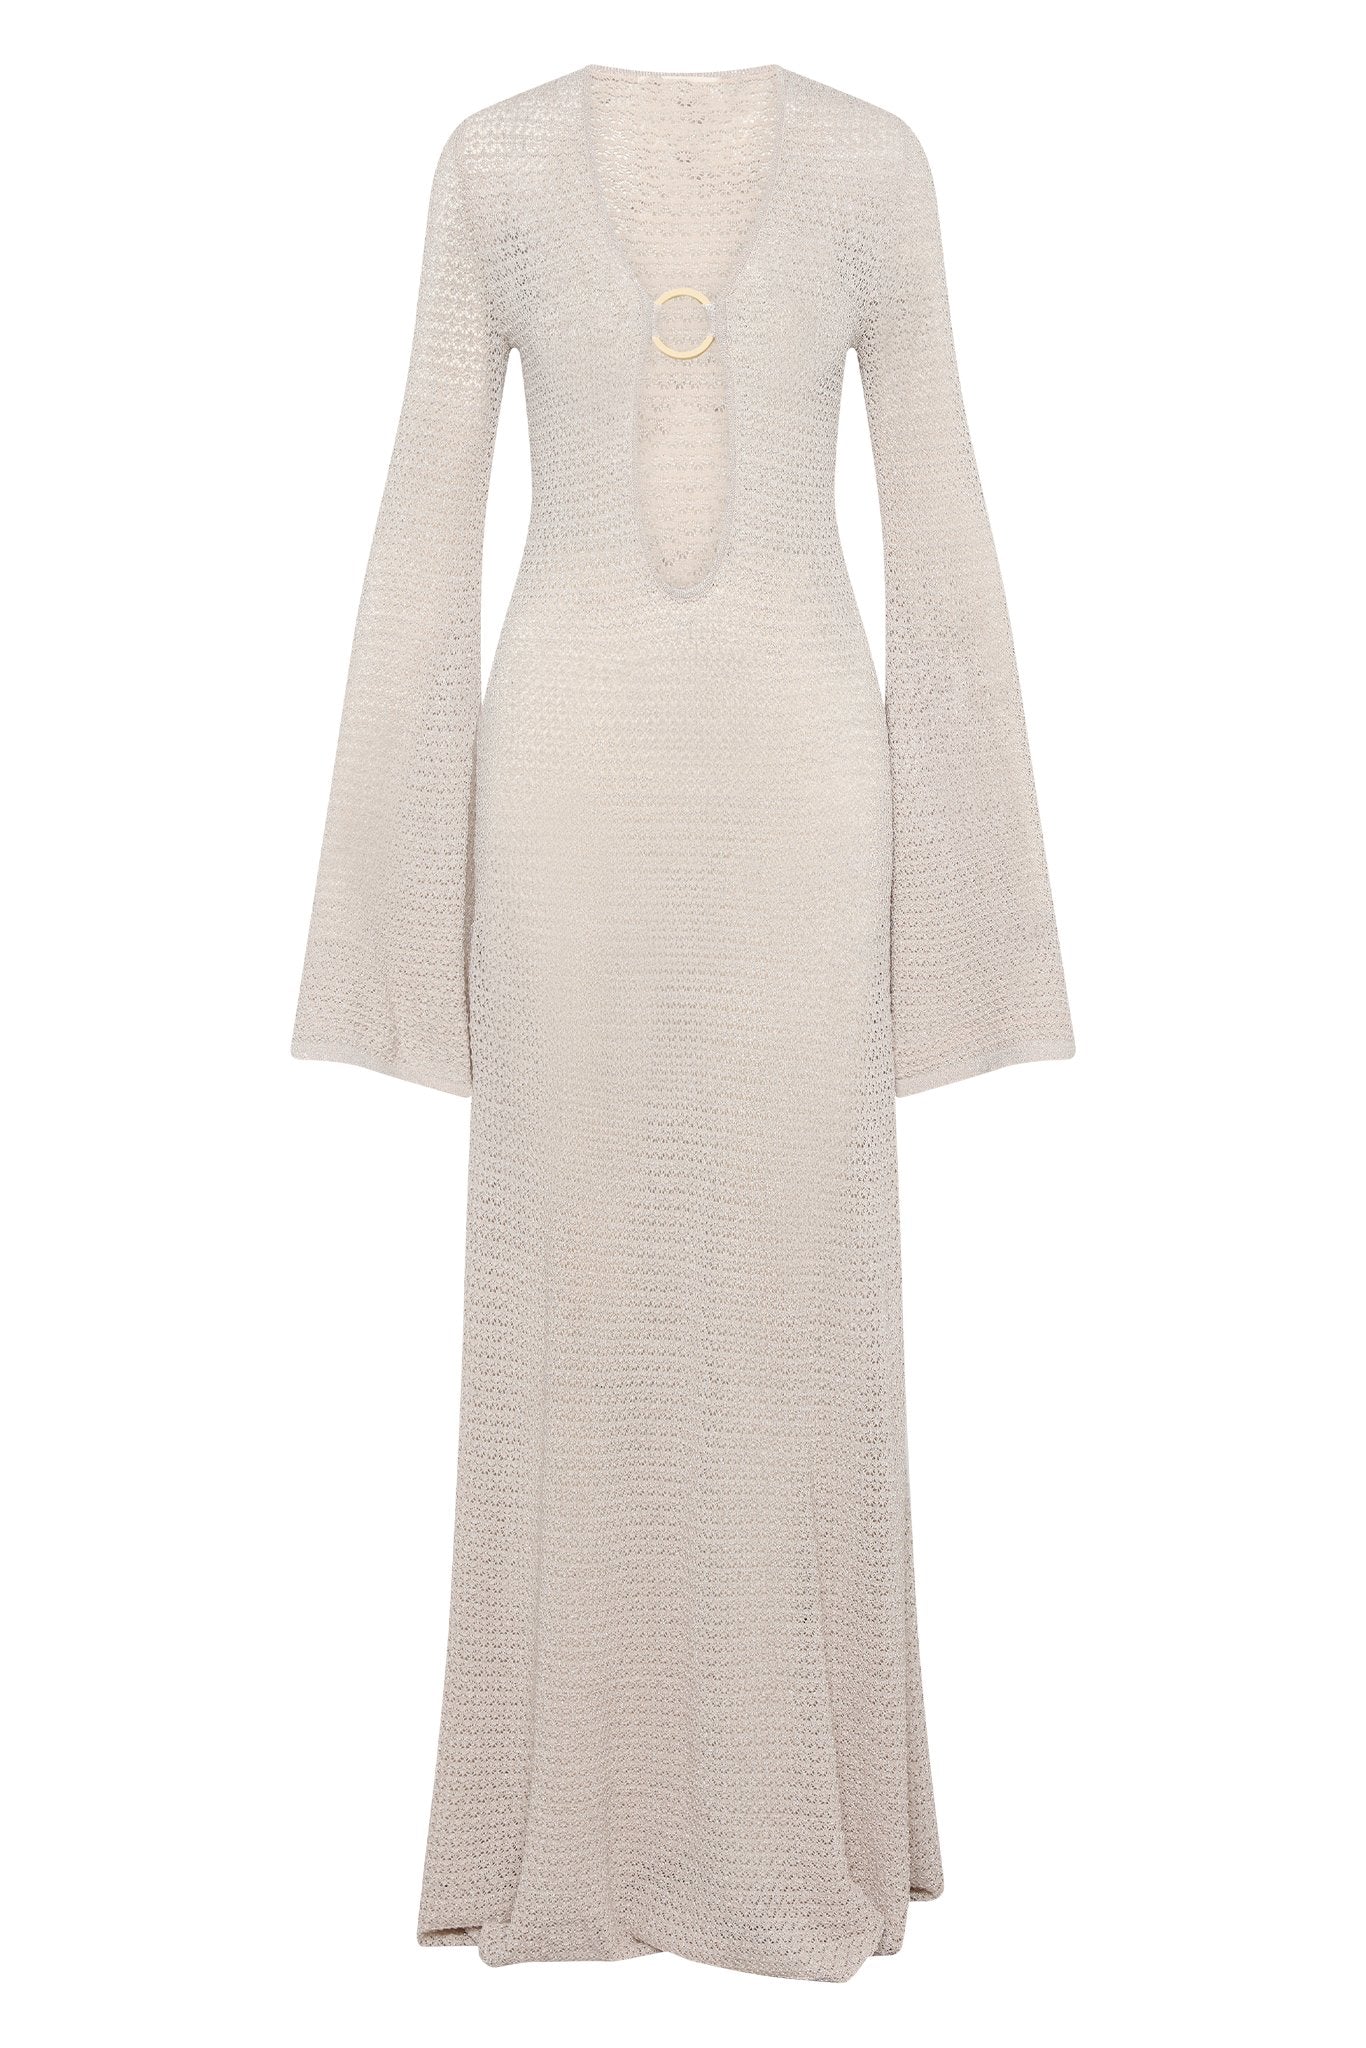 dresses-Chaya V-neck Crochet Knit Maxi Dress-SD00211271977-Beige-S - Sunfere